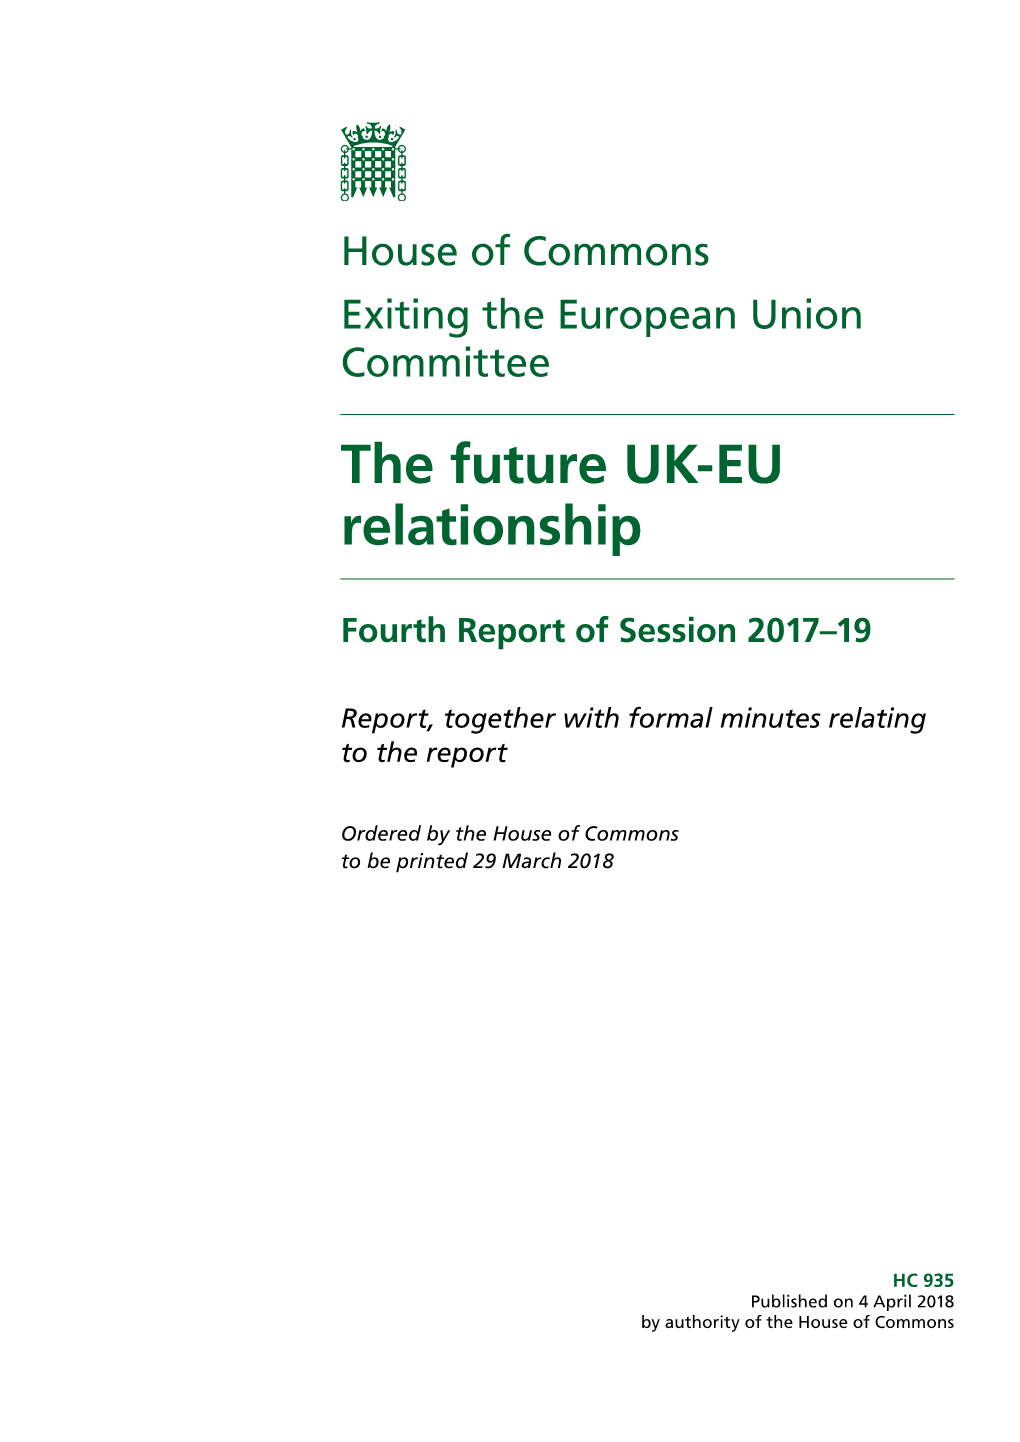 The Future UK-EU Relationship